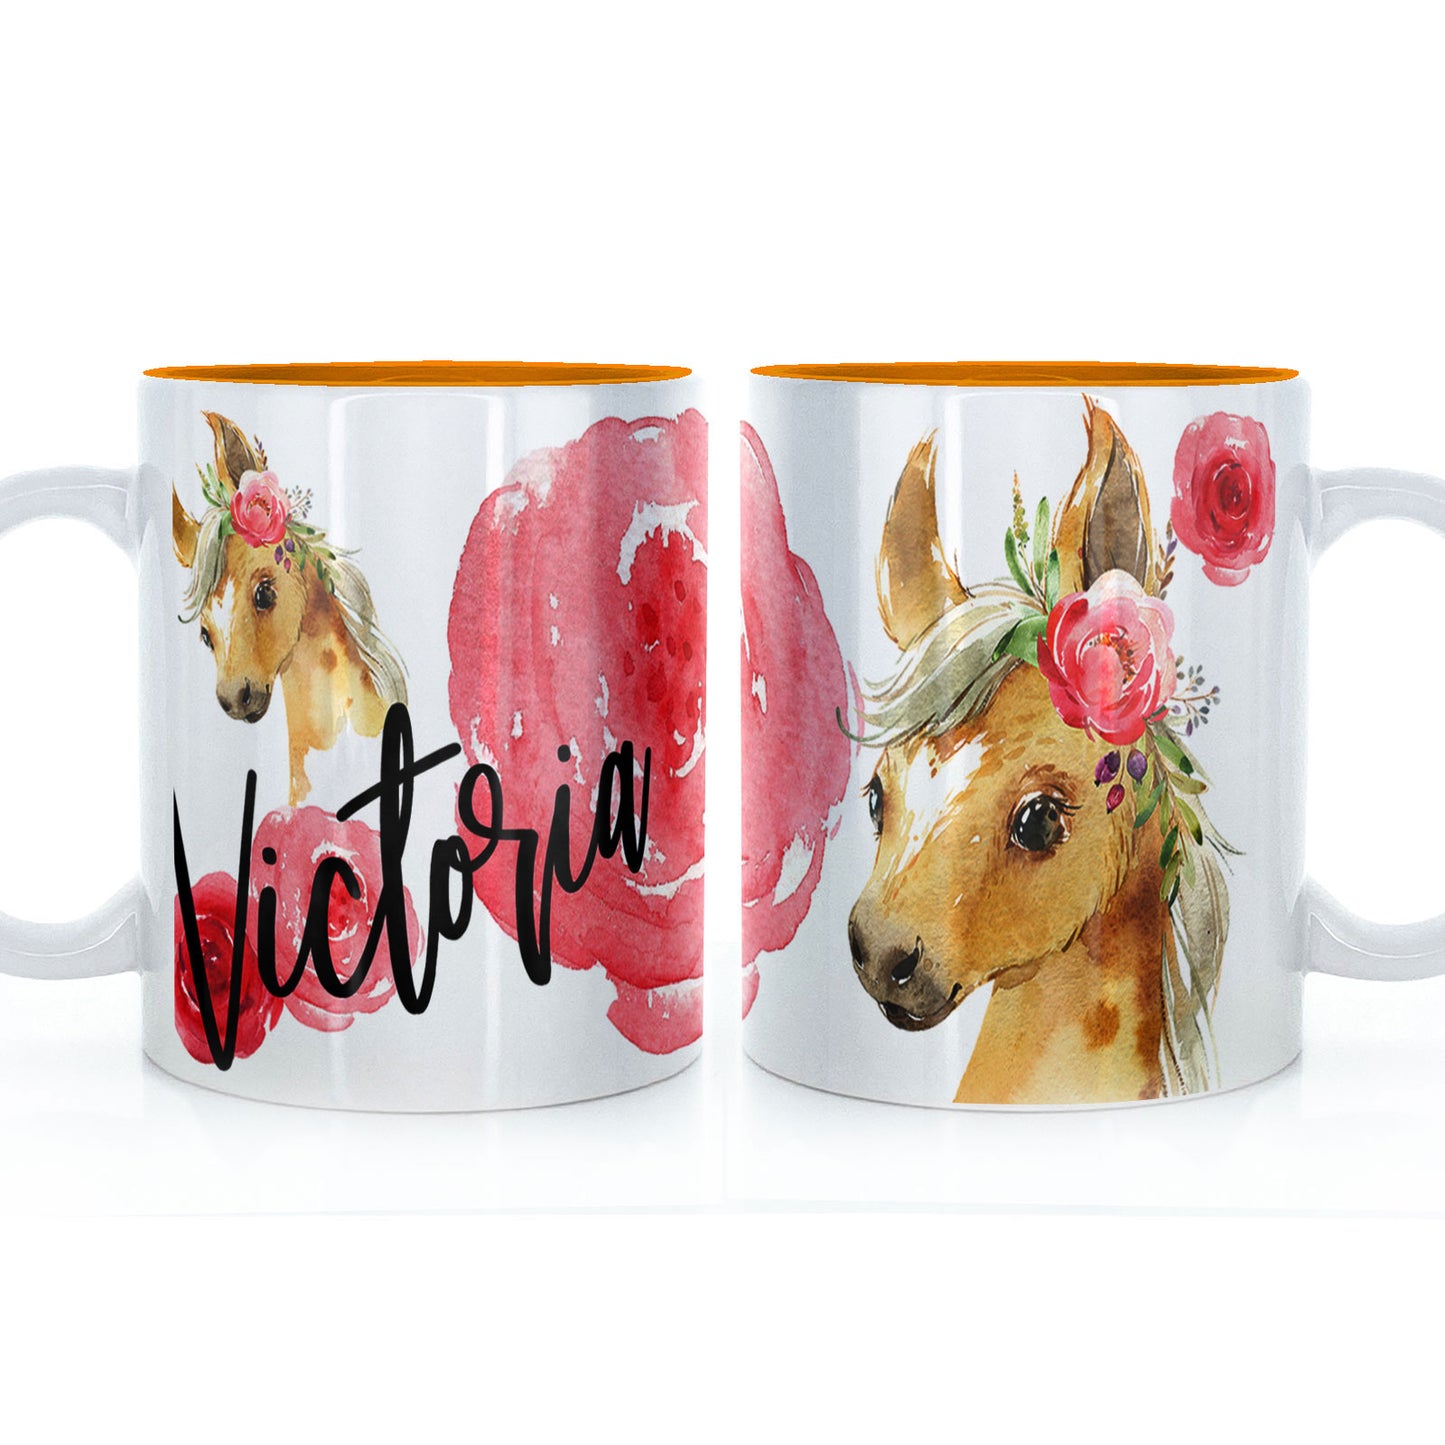 Personalised Mug with Stylish Text and Rose Horse